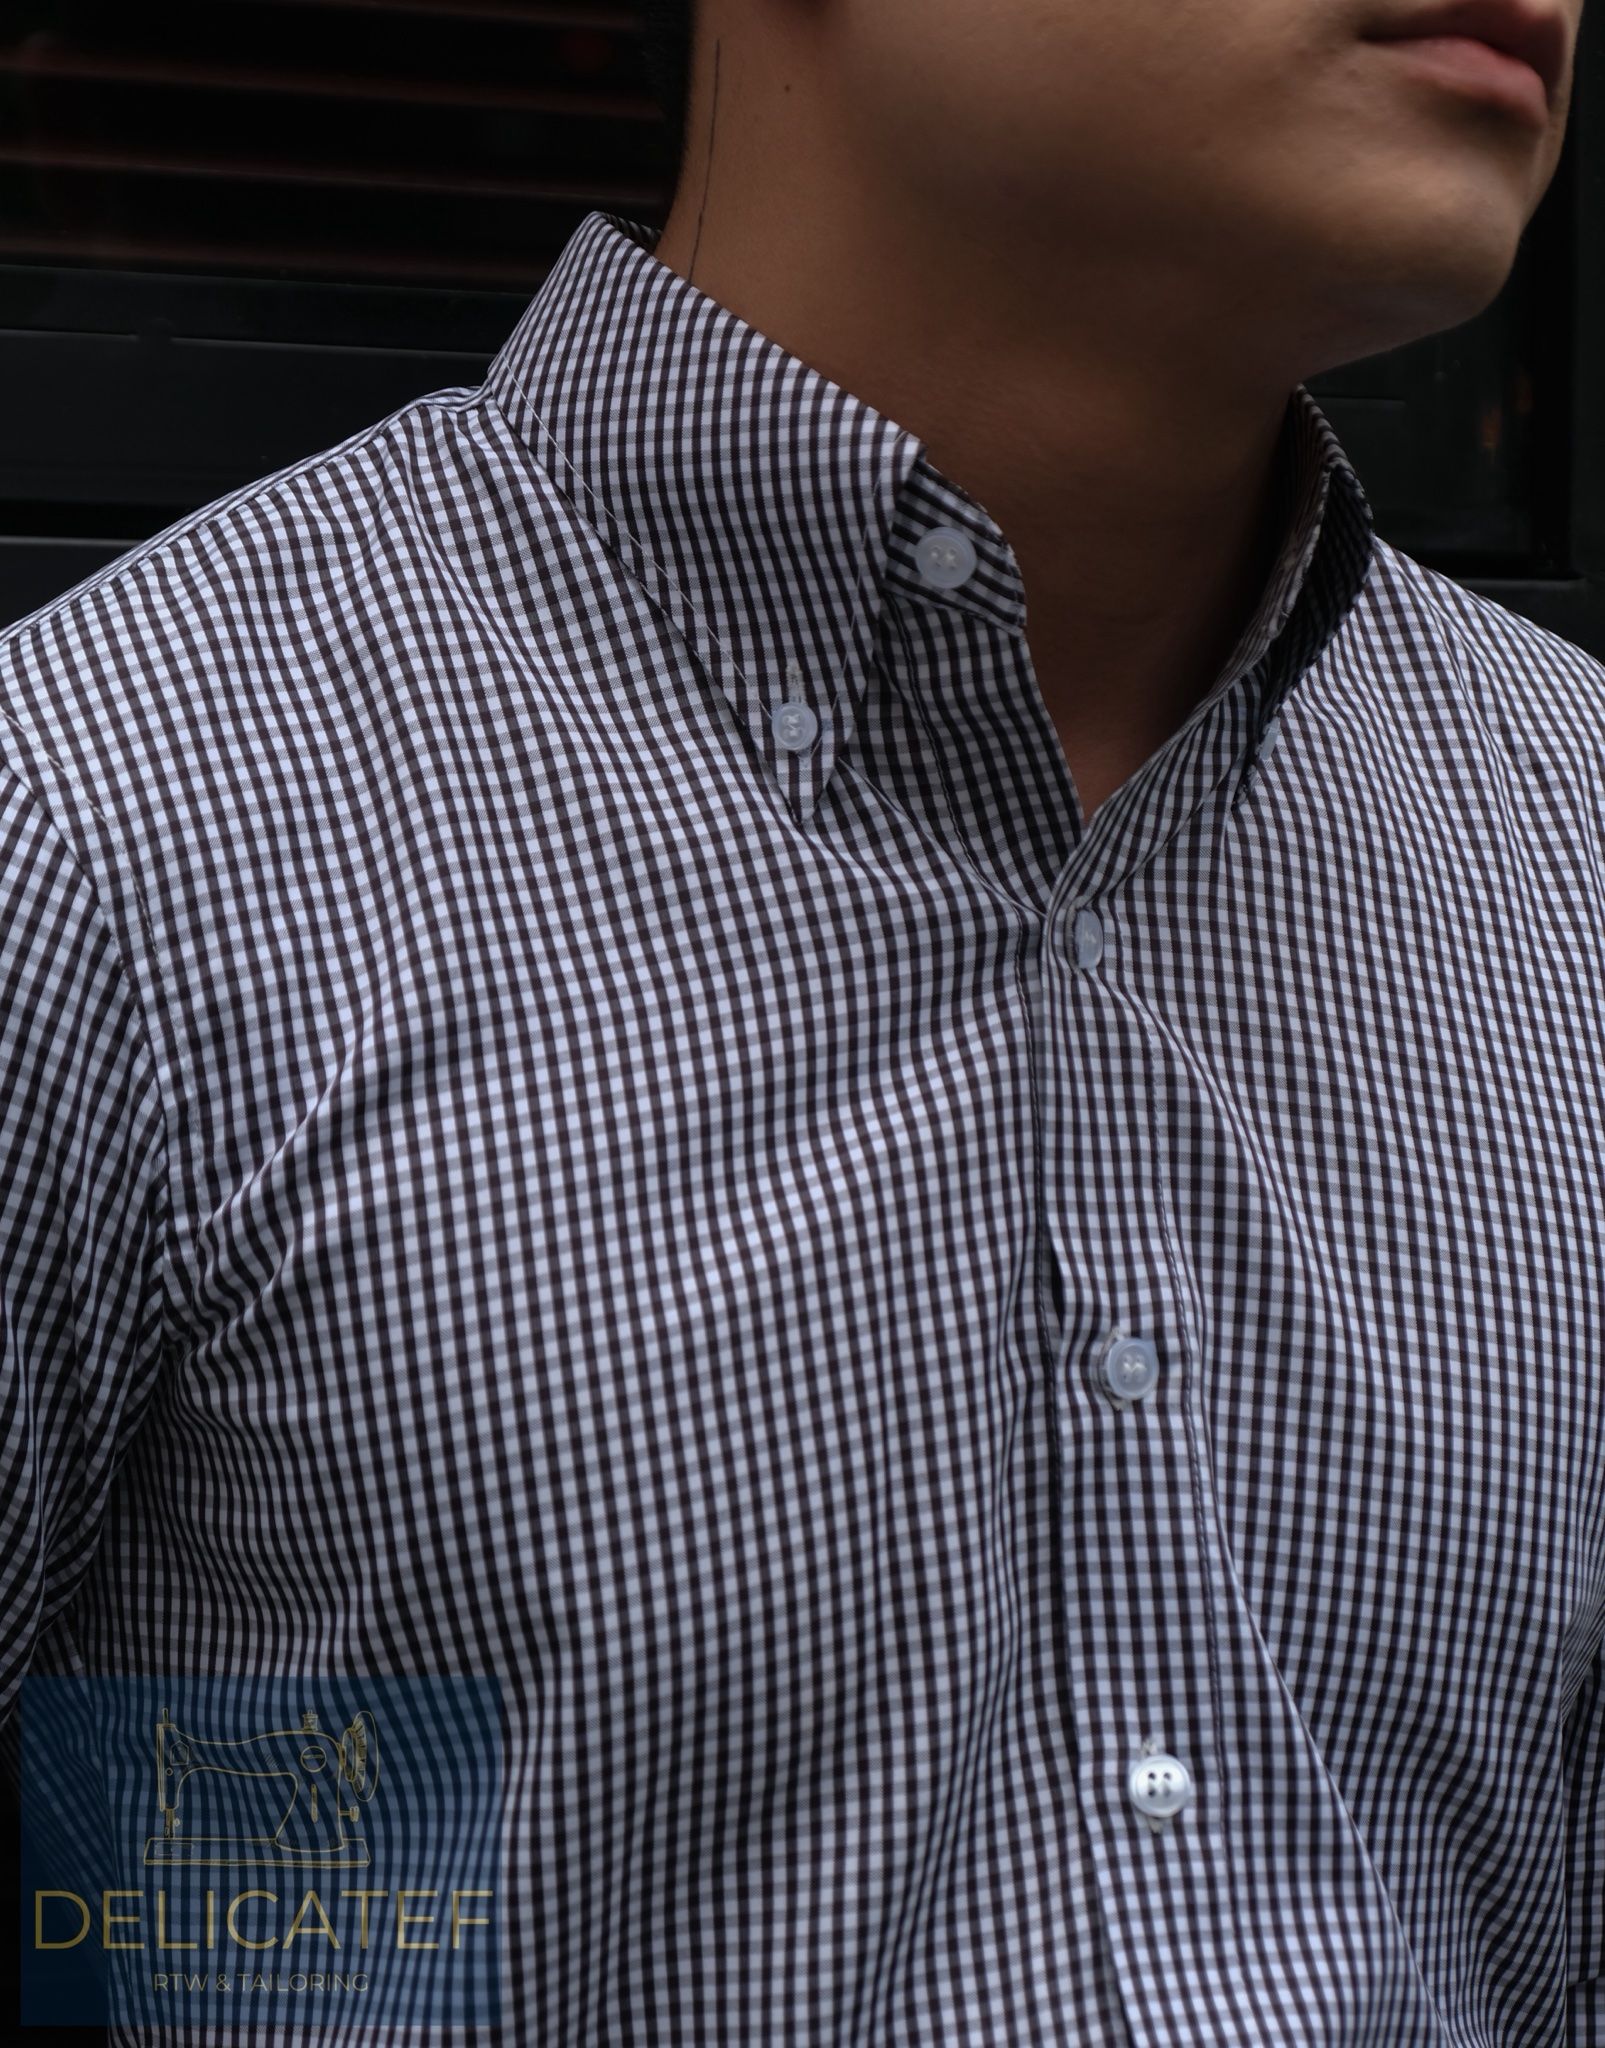  Sơ Mi Ca Rô Đen - Spread & Buttondown Collar - Black checkered shirt 